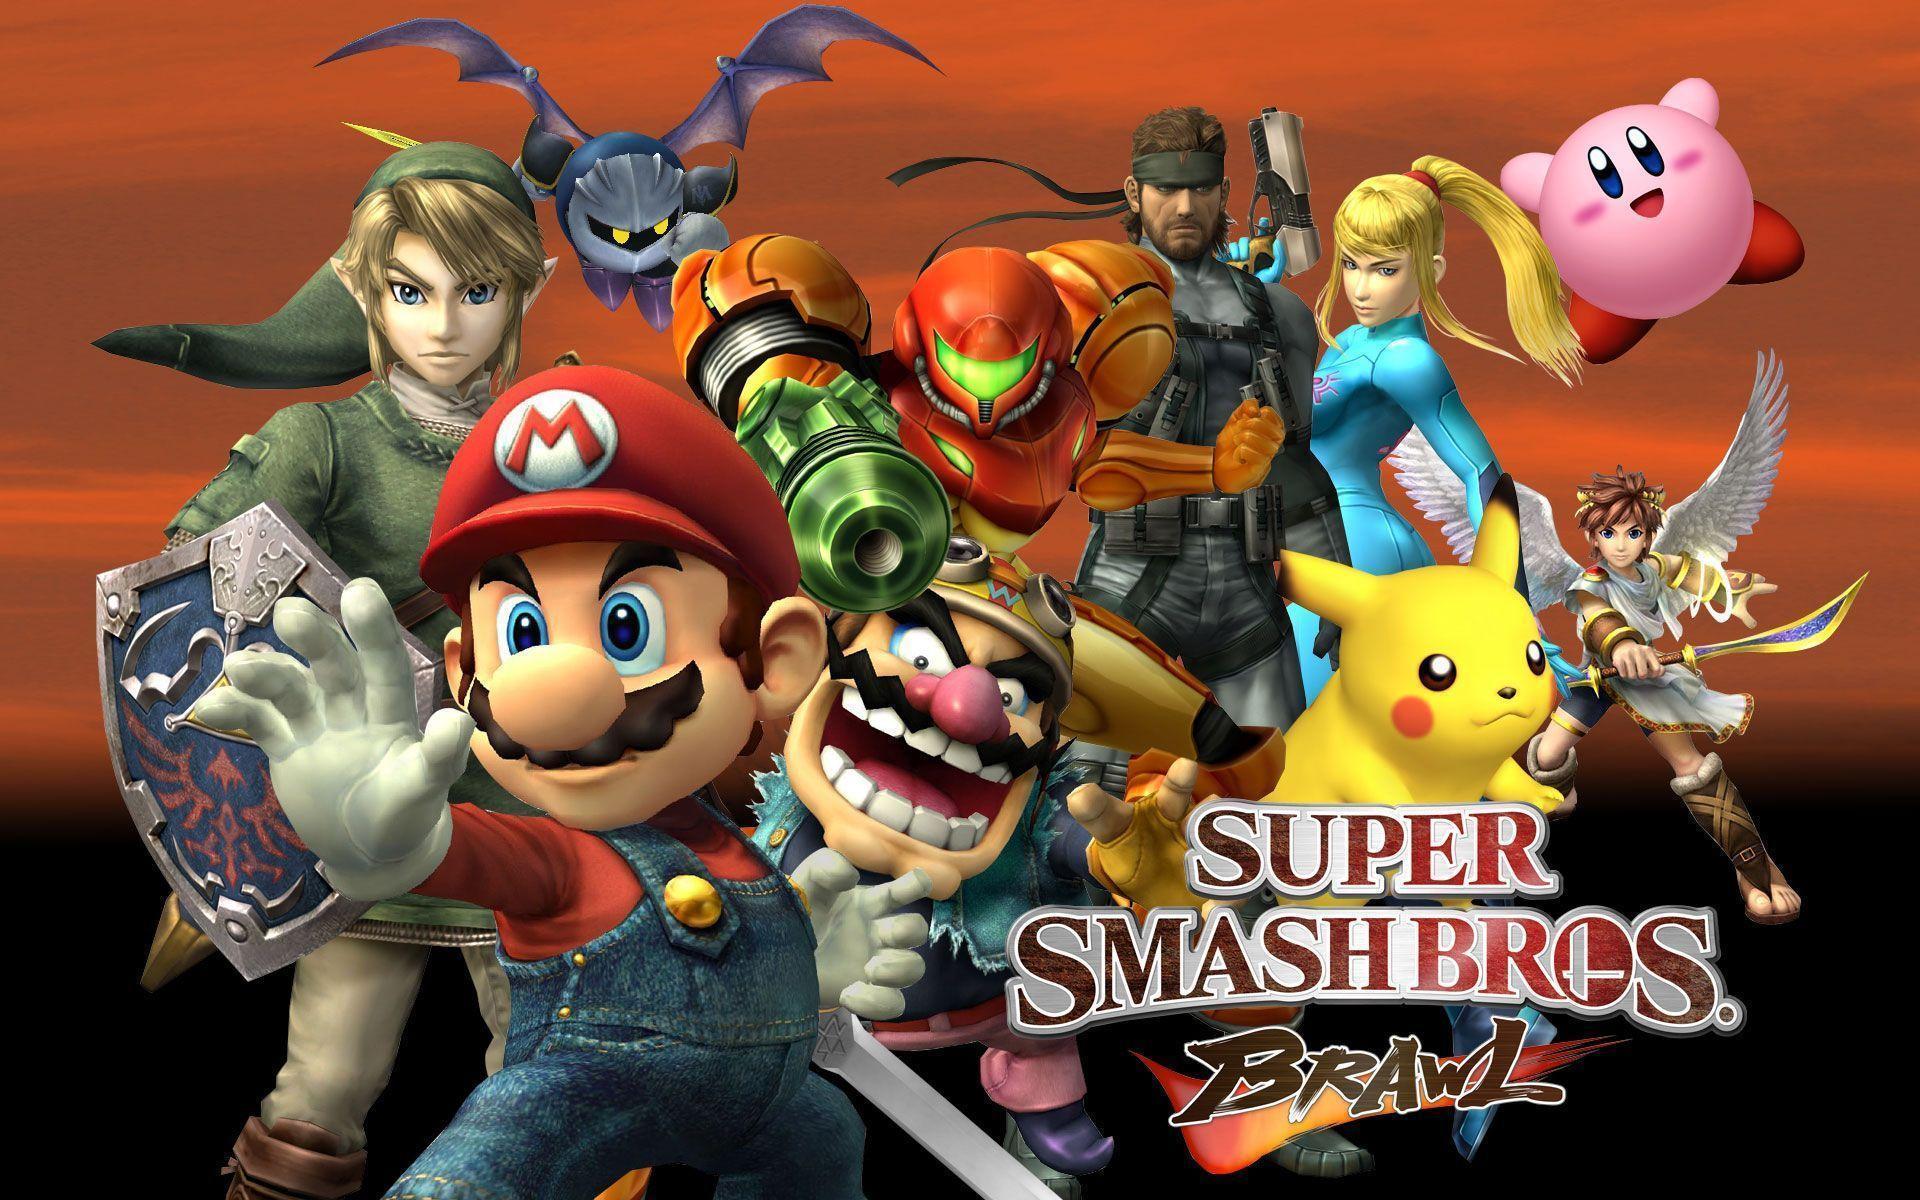 Super Smash Bros Brawl in Games